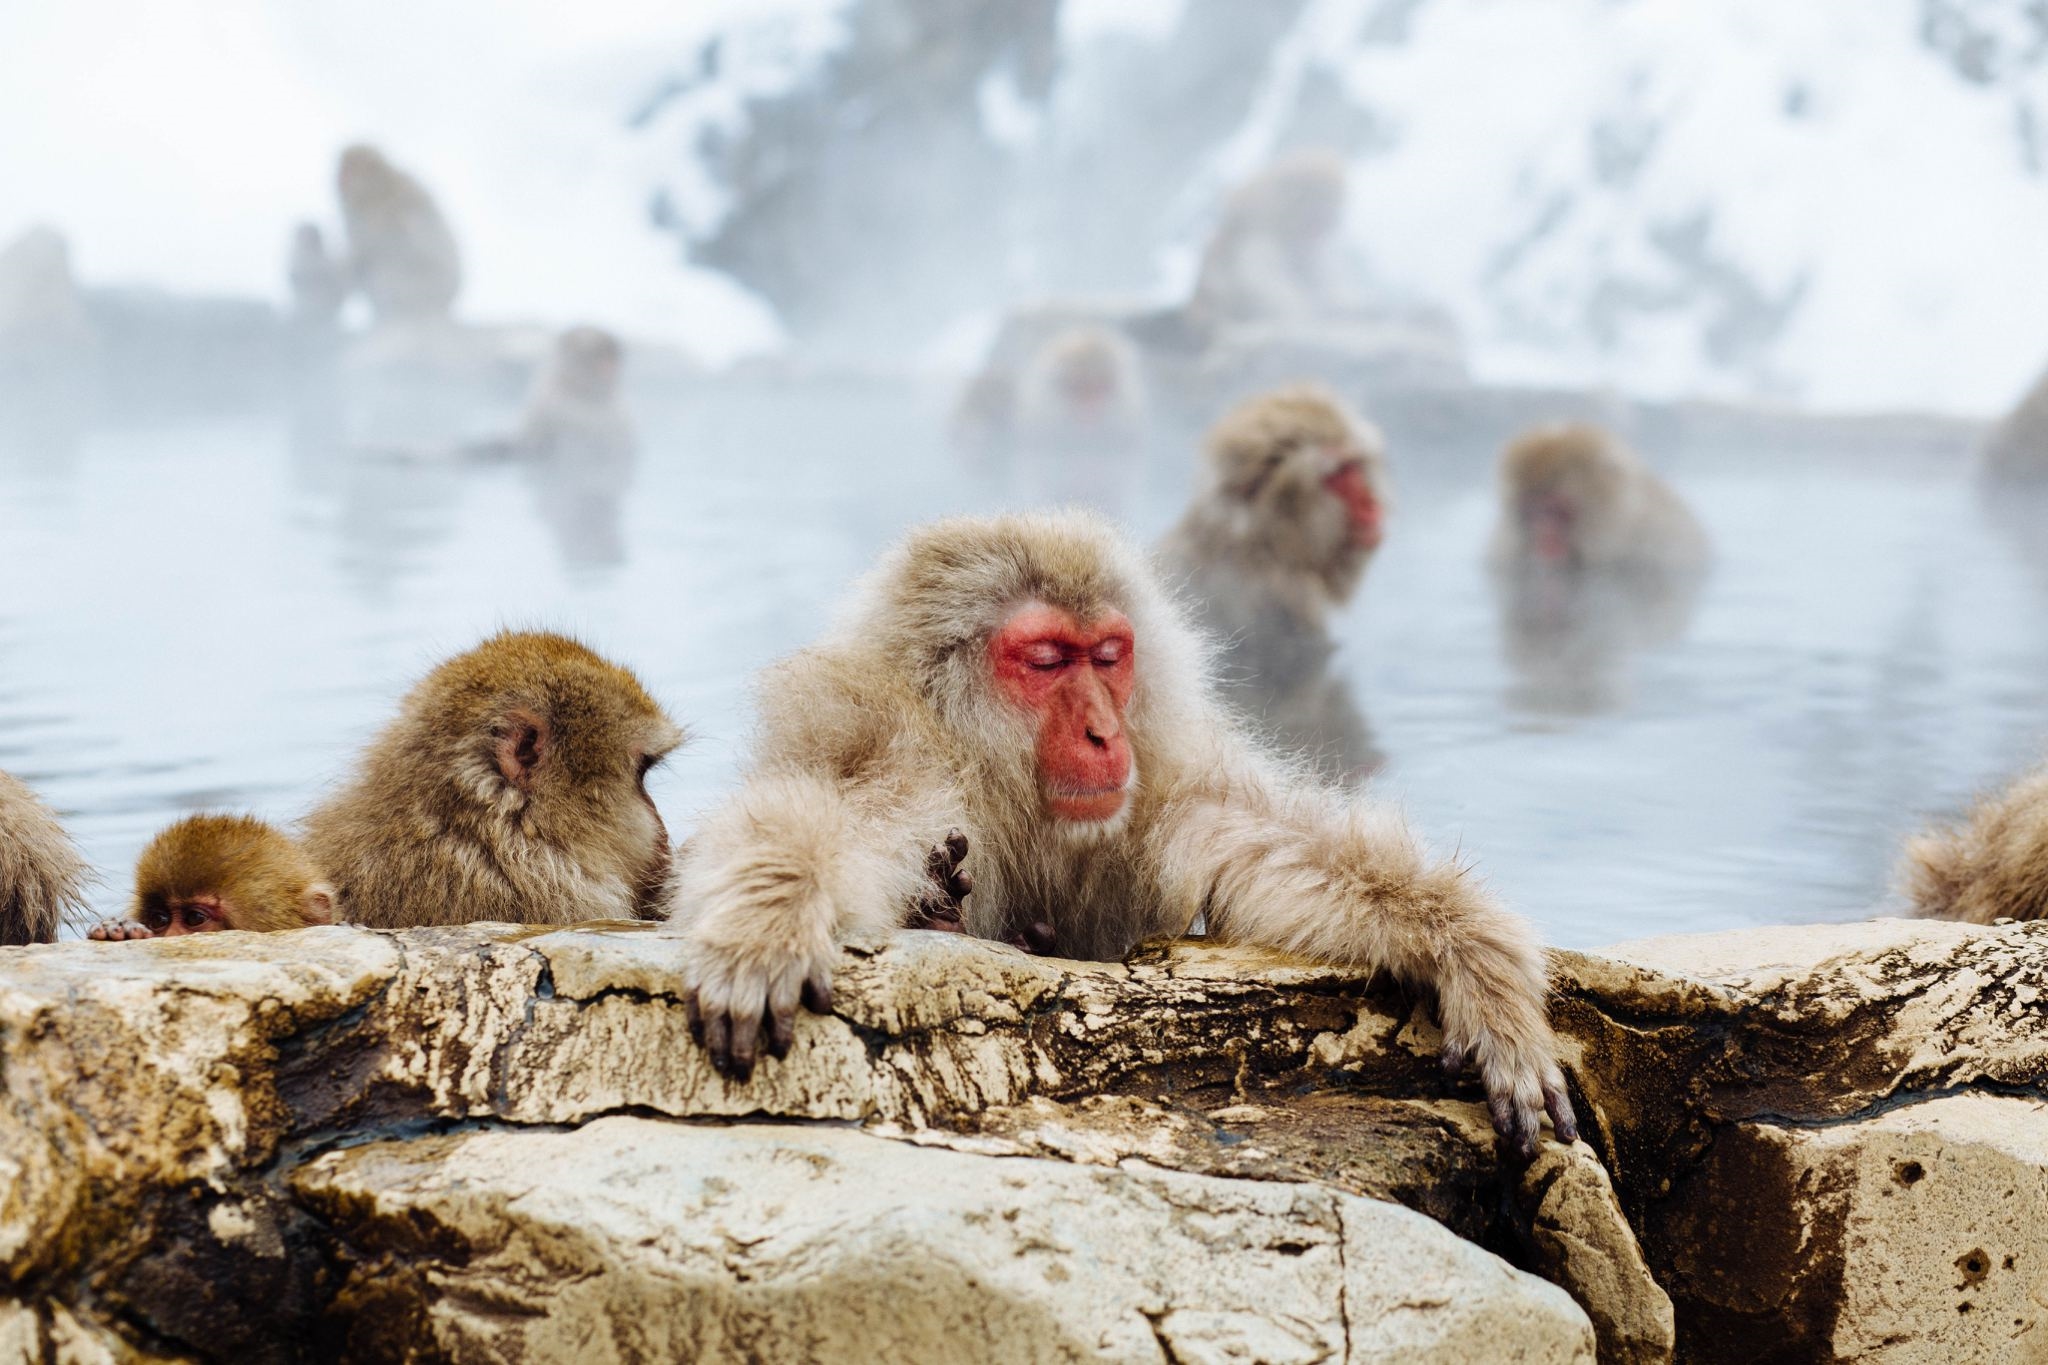 Yamanouchi Area - Home of the Snow Monkeys